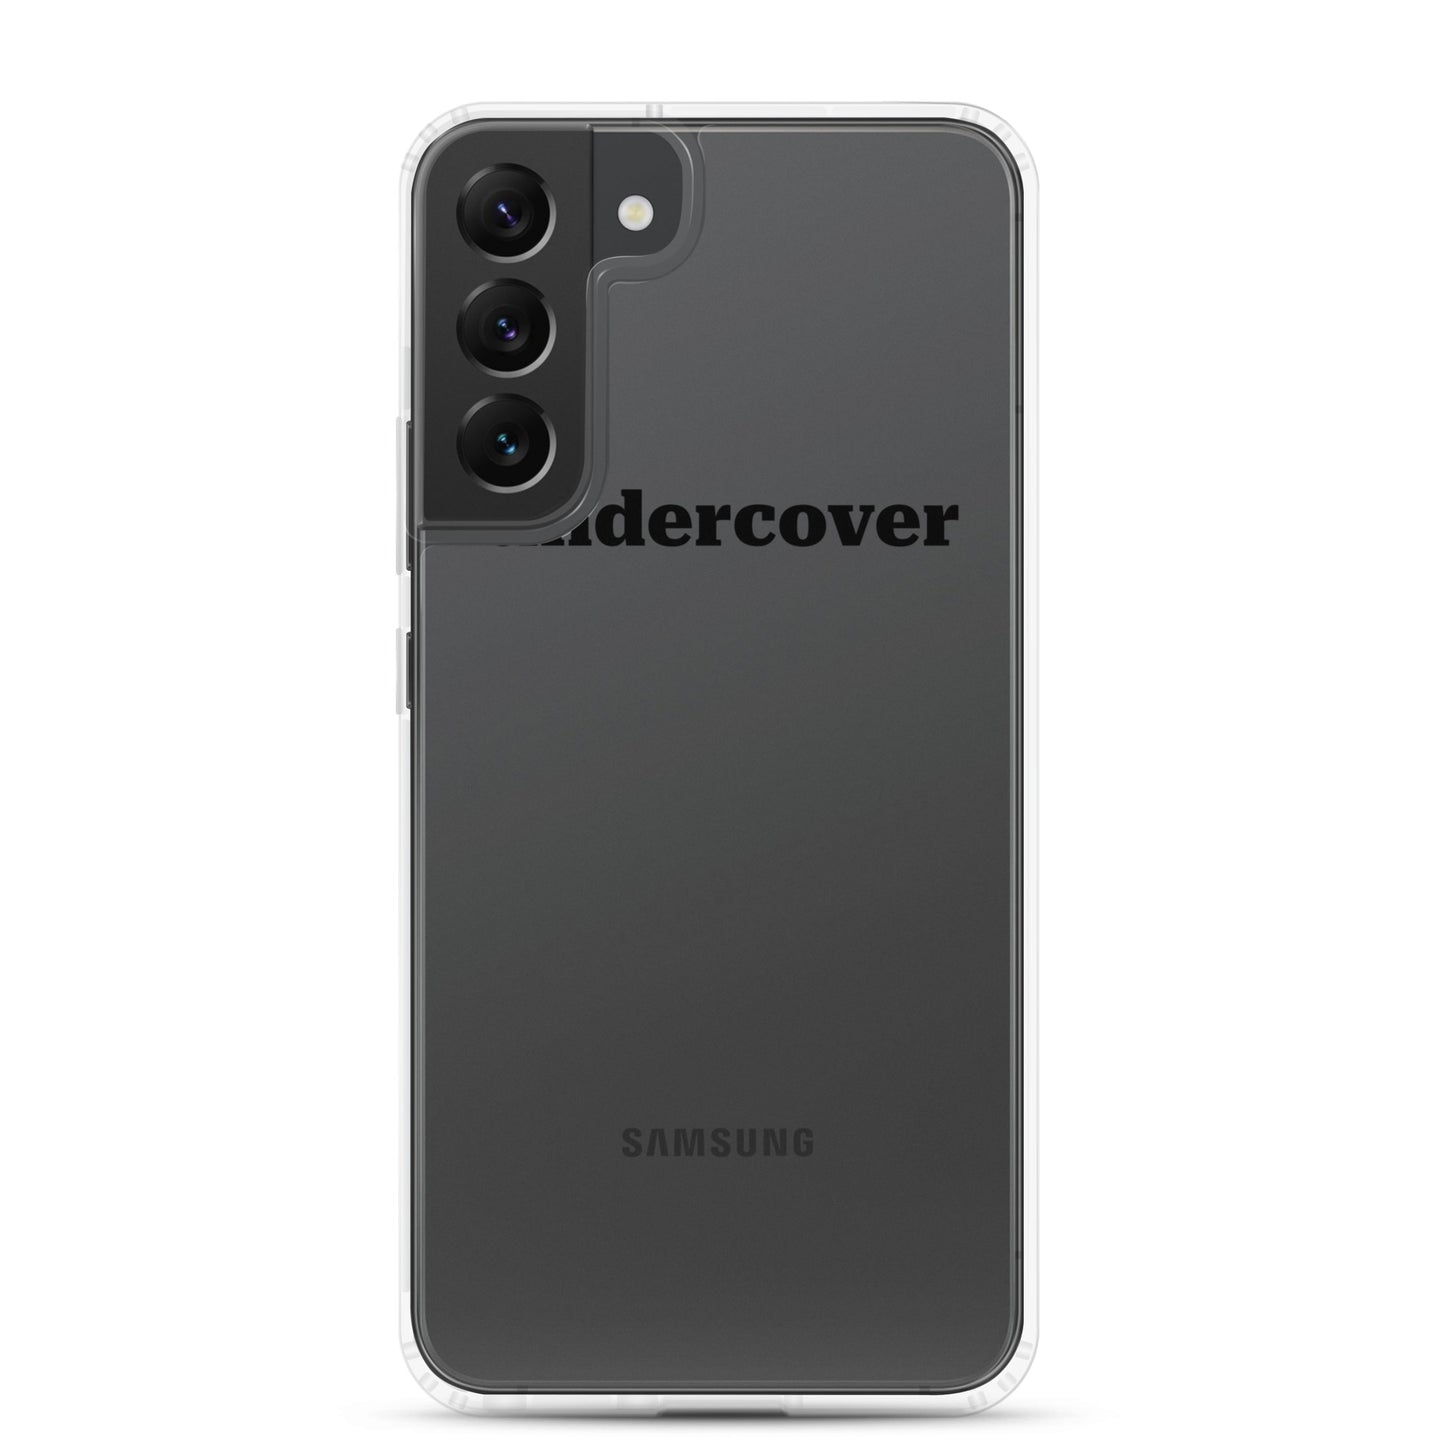 Samsung® Case Undercover